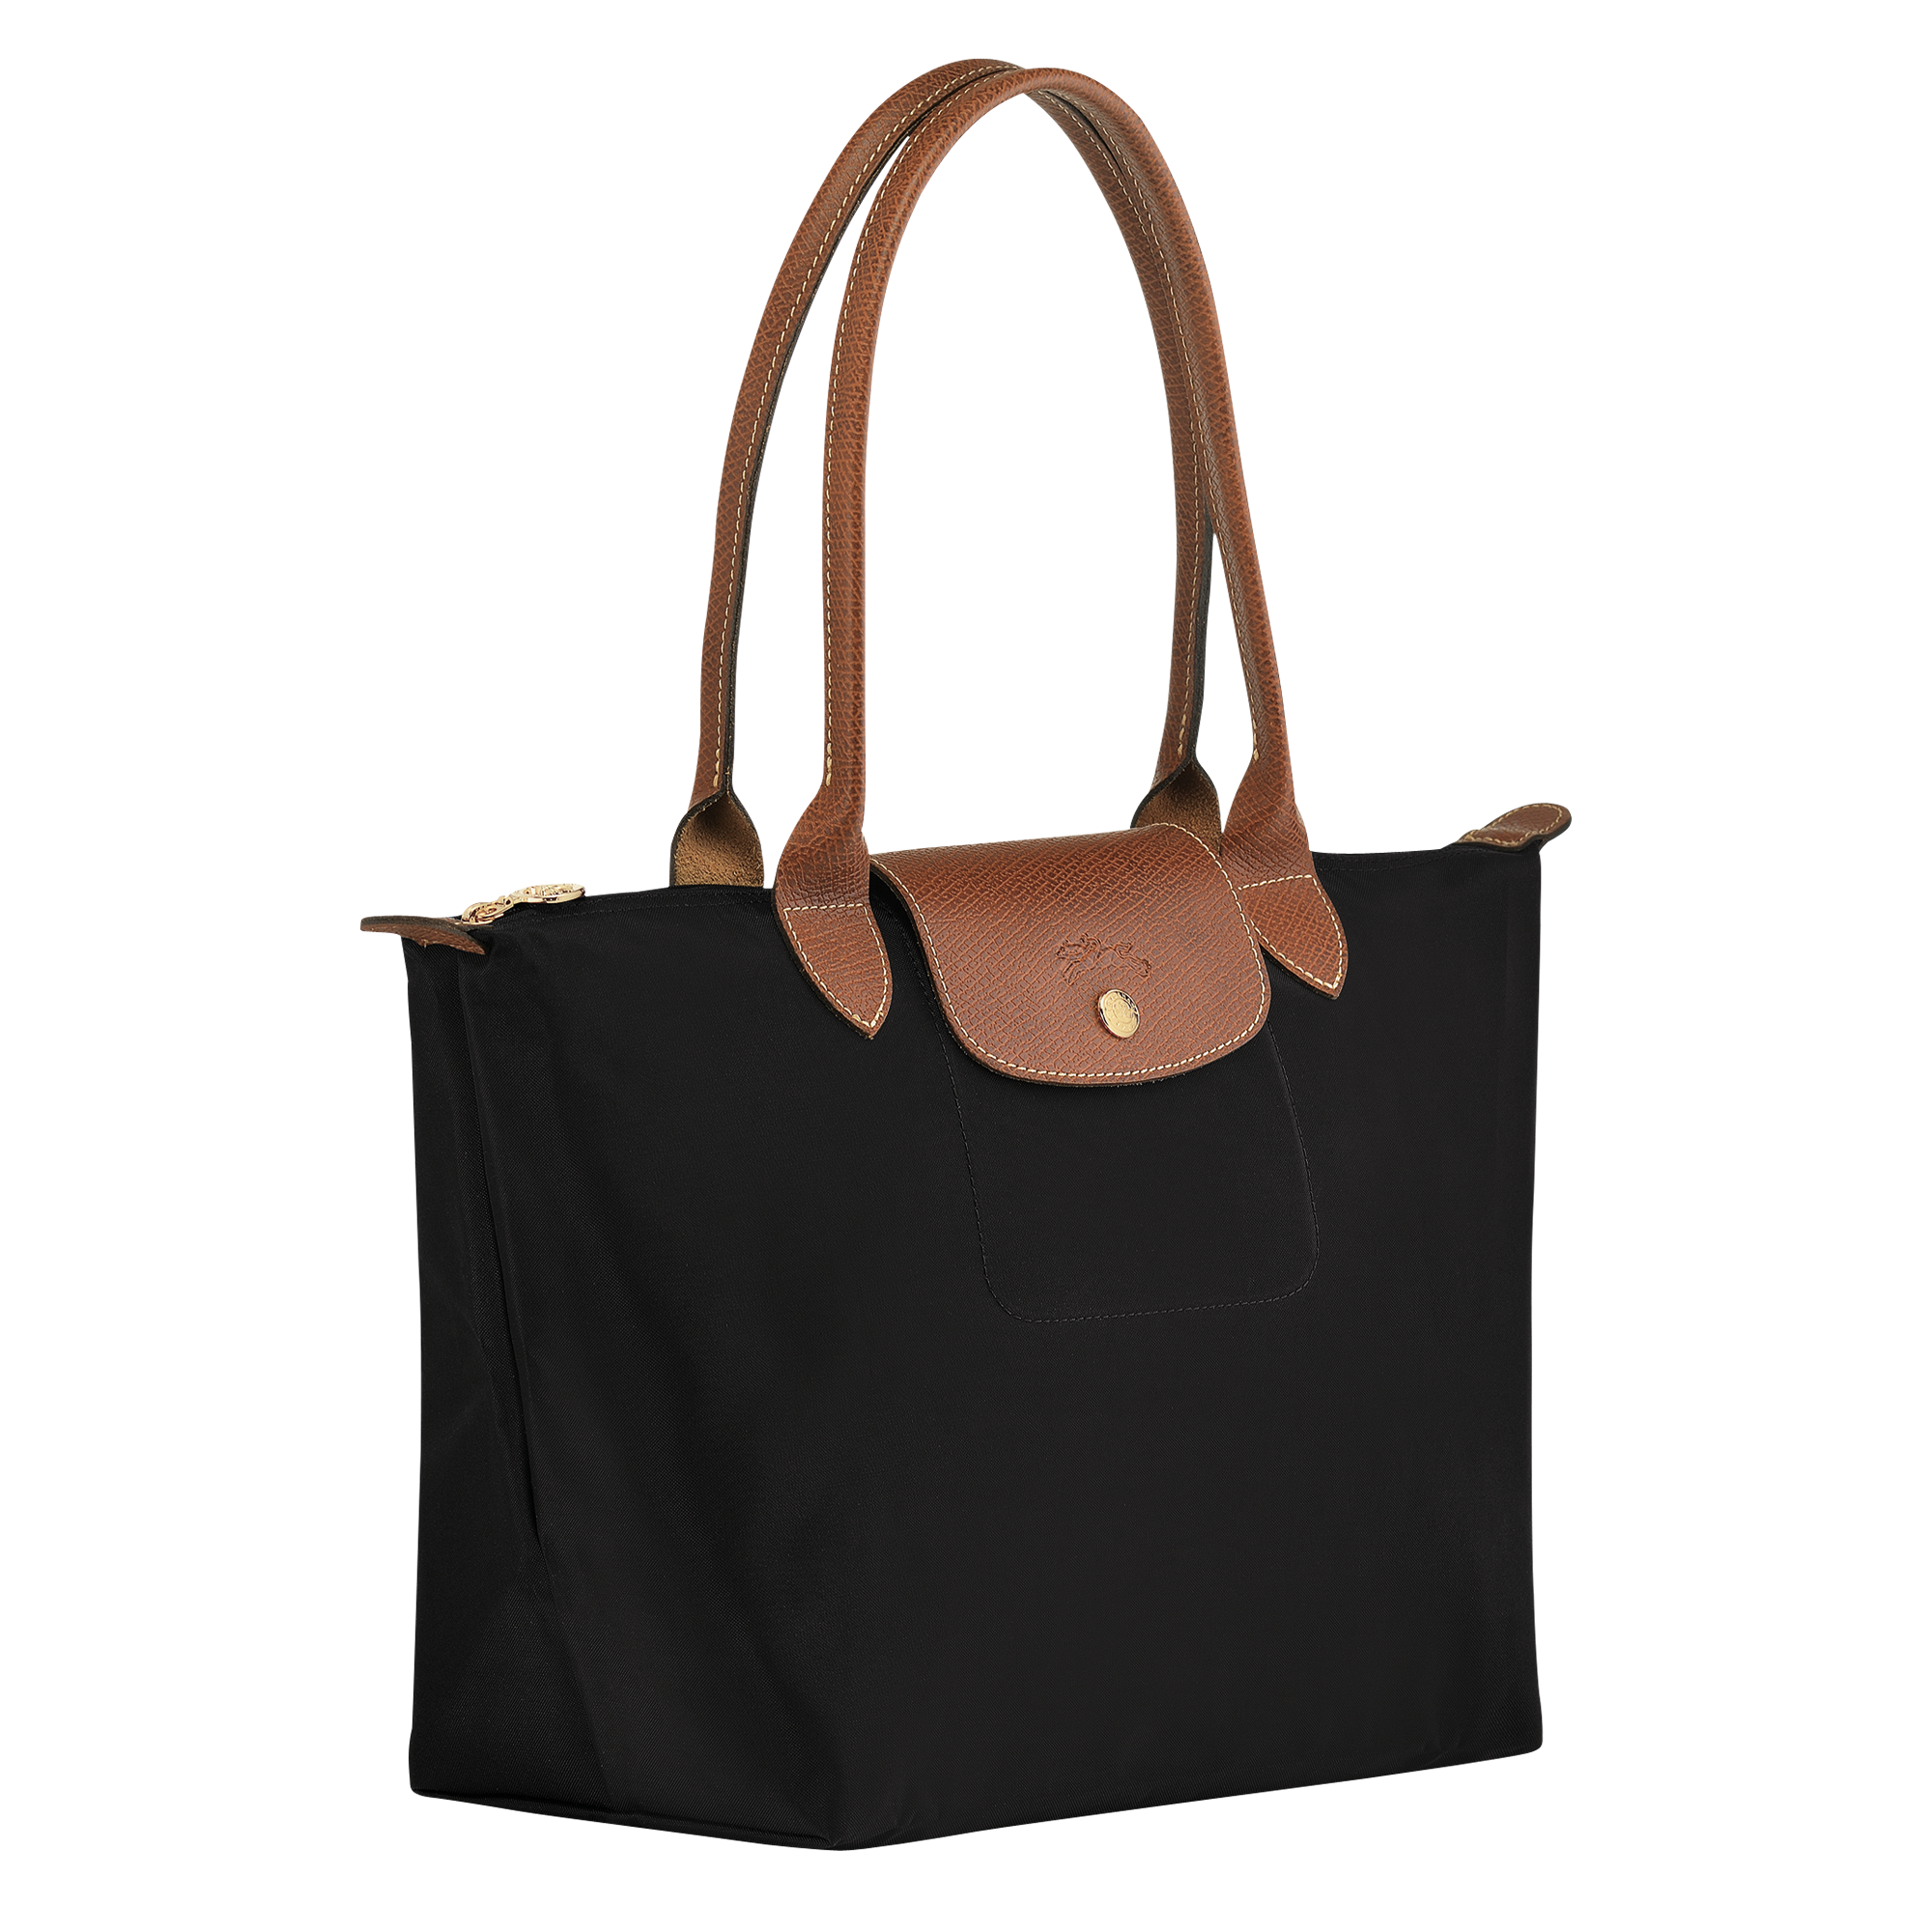 Le Pliage Original M Tote bag Black - Recycled canvas (L2605089001